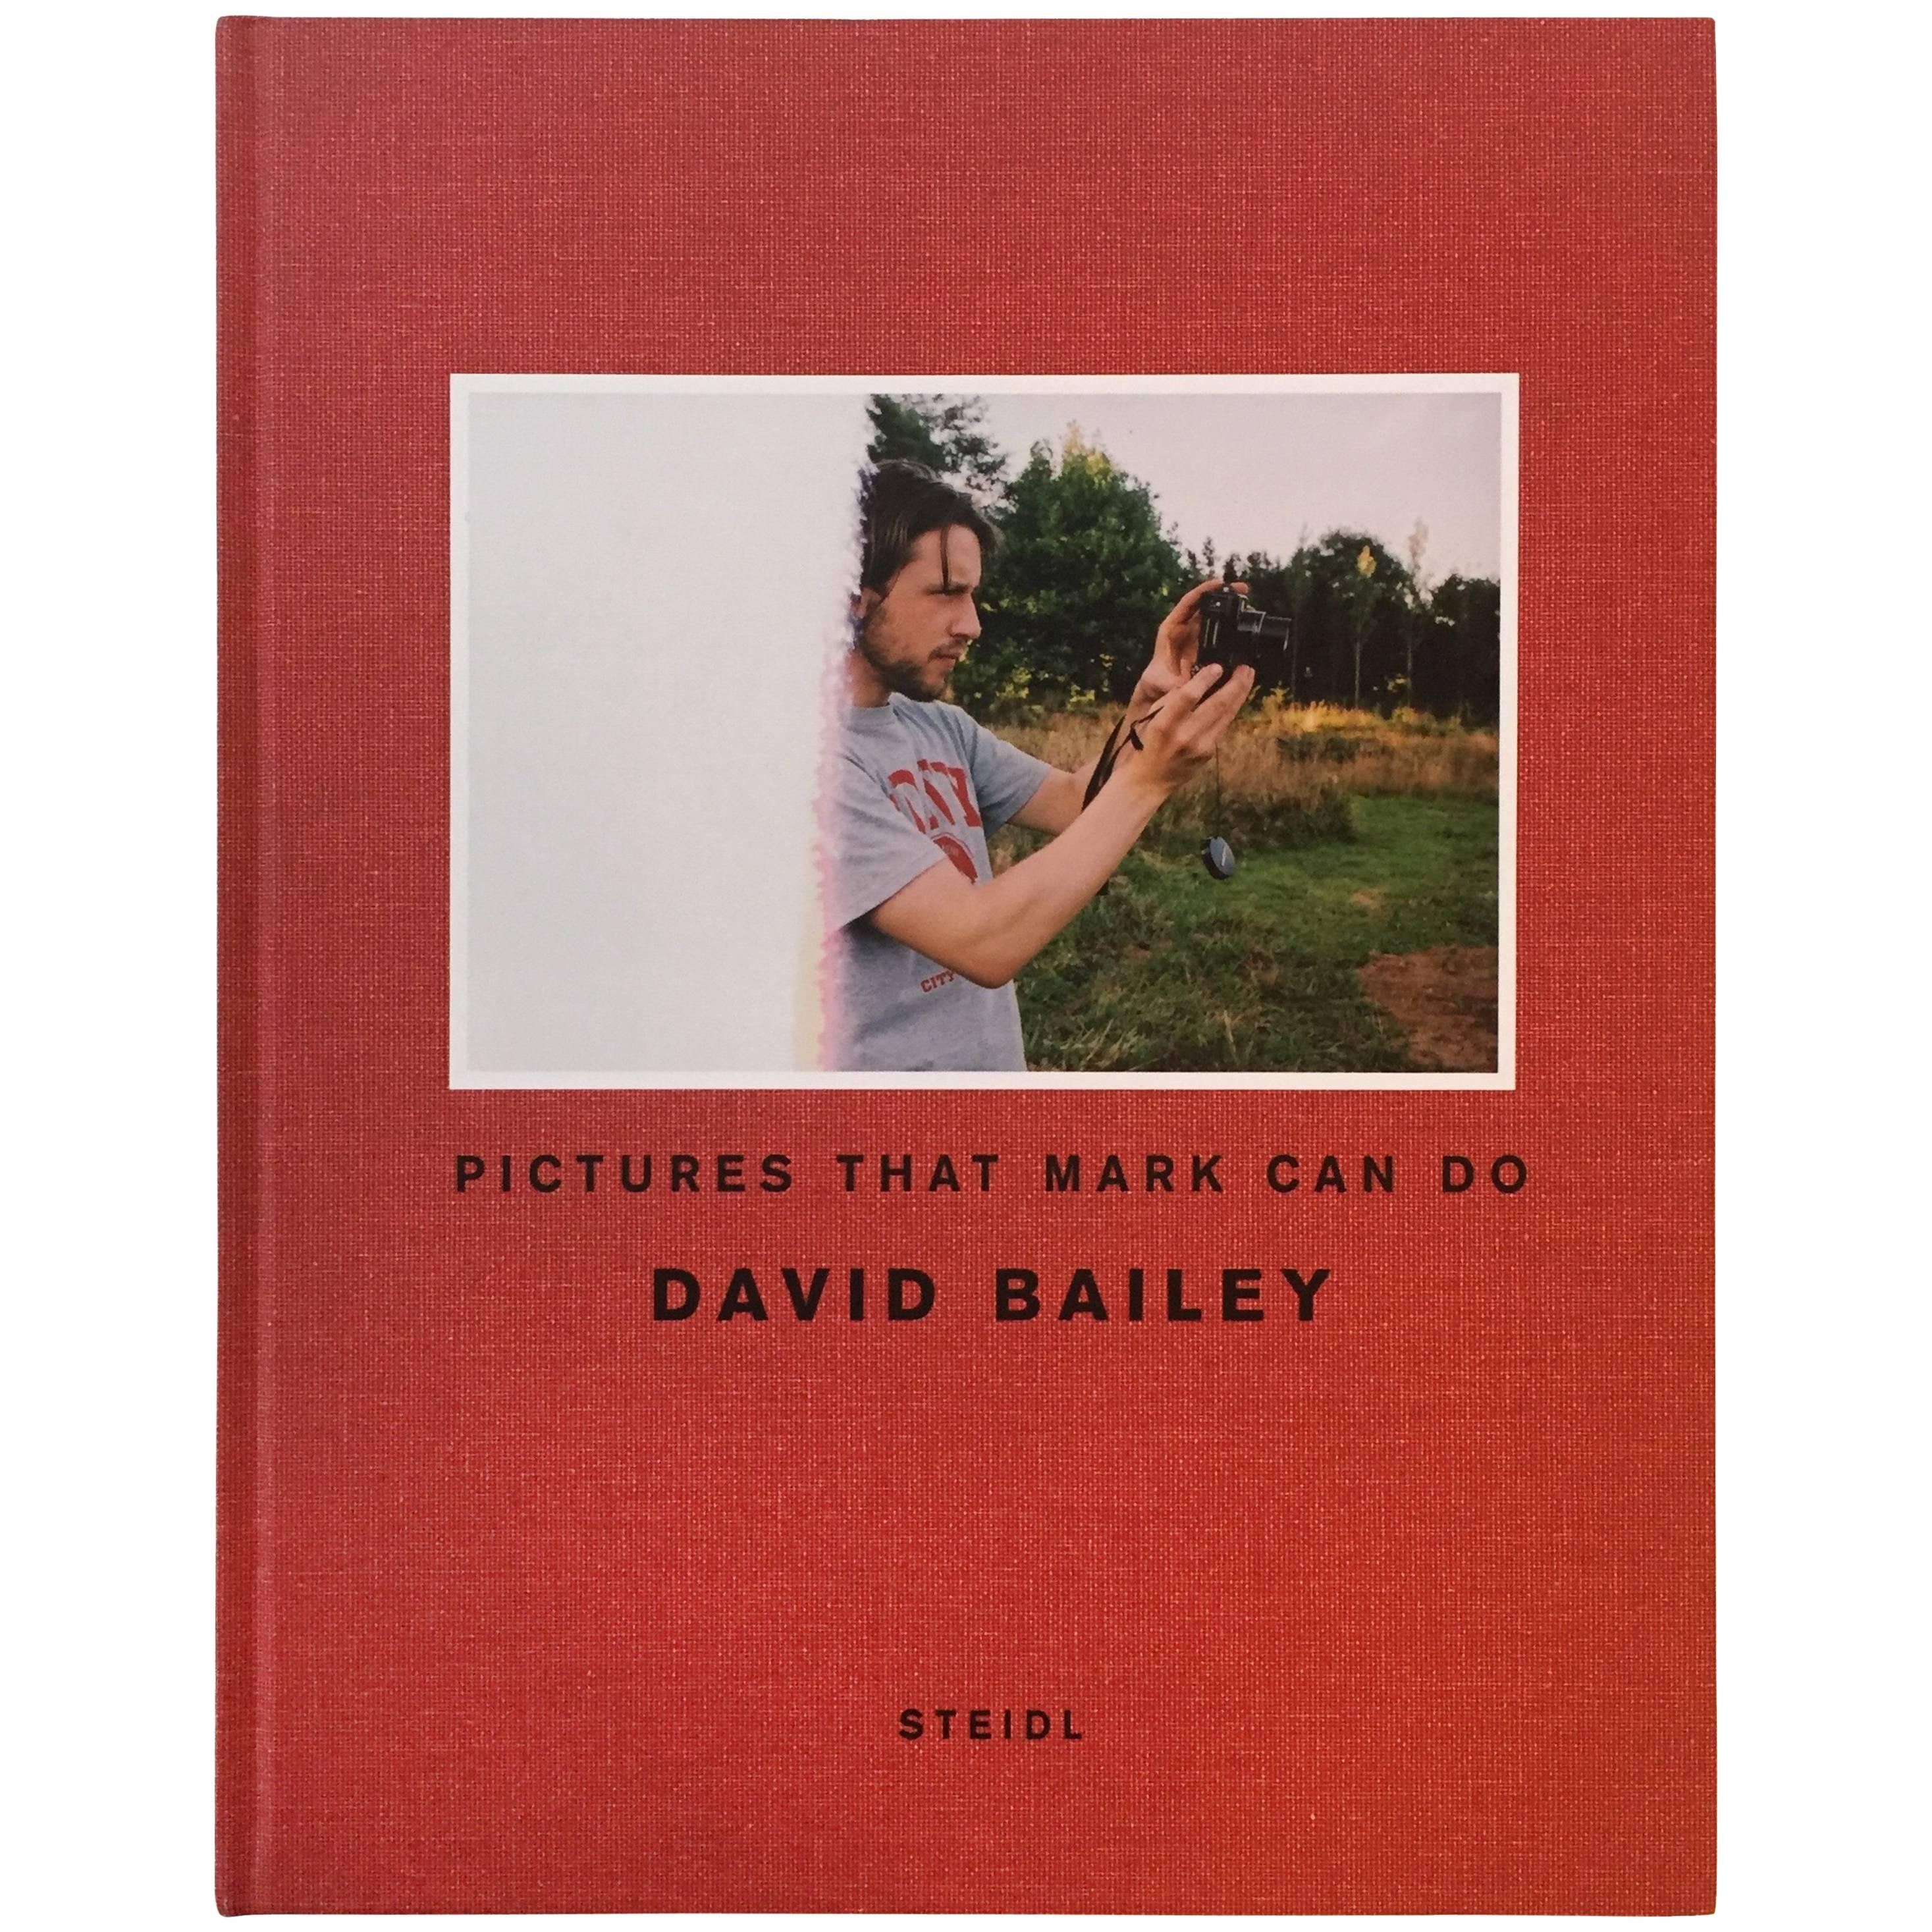 Pictures That Mark Can Do - David Bailey - 1ère édition signée, Steidl, 2007